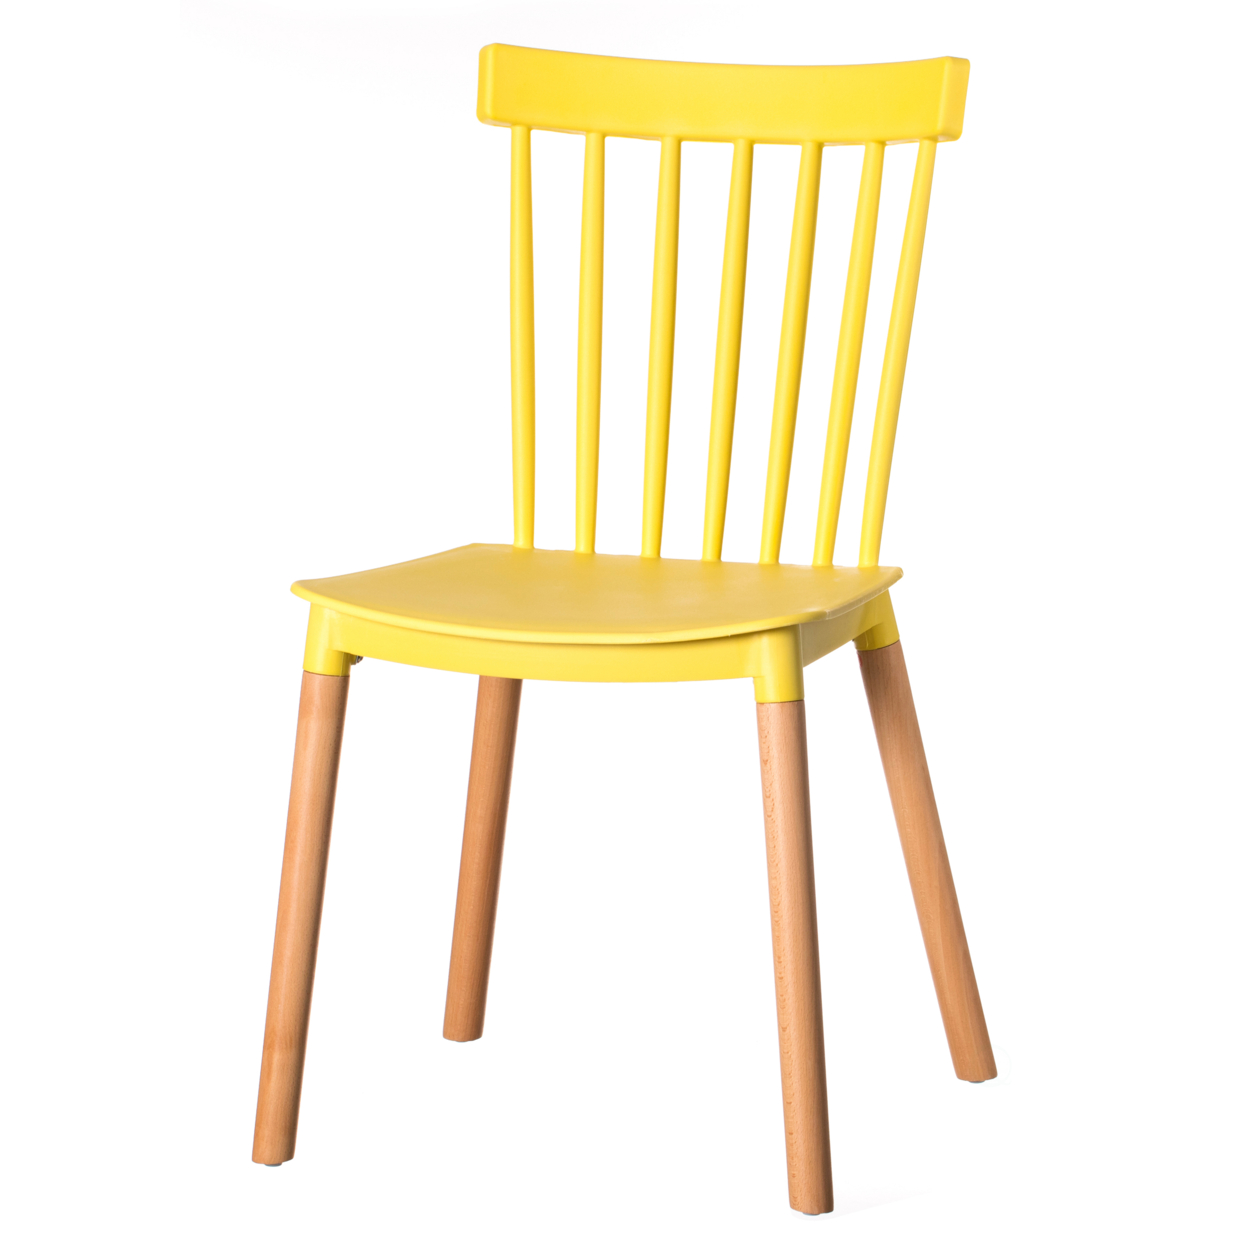 Modern Plastic Dining Chair Windsor Design With Beech Wood Legs - Single Yellow